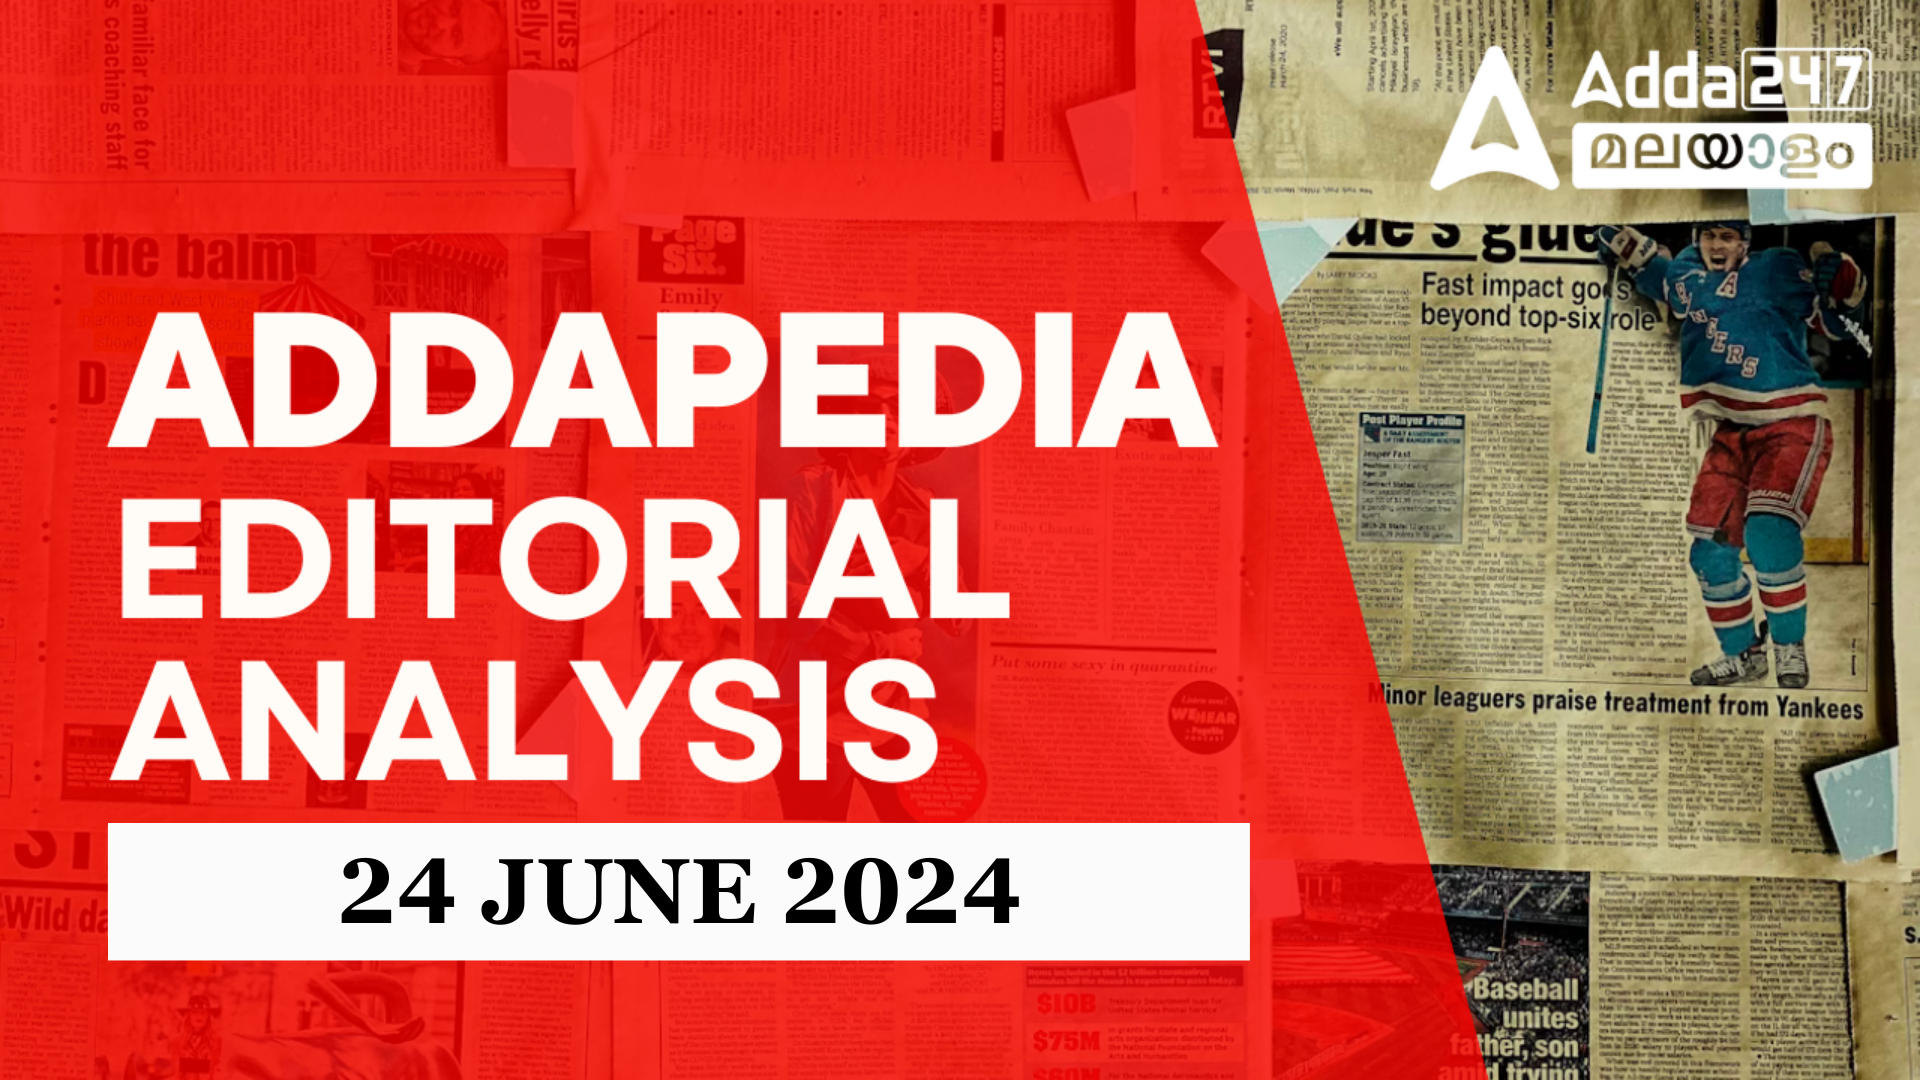 Addapedia Editorial Analysis: Daily News Editorial PDF, 24 June 2024